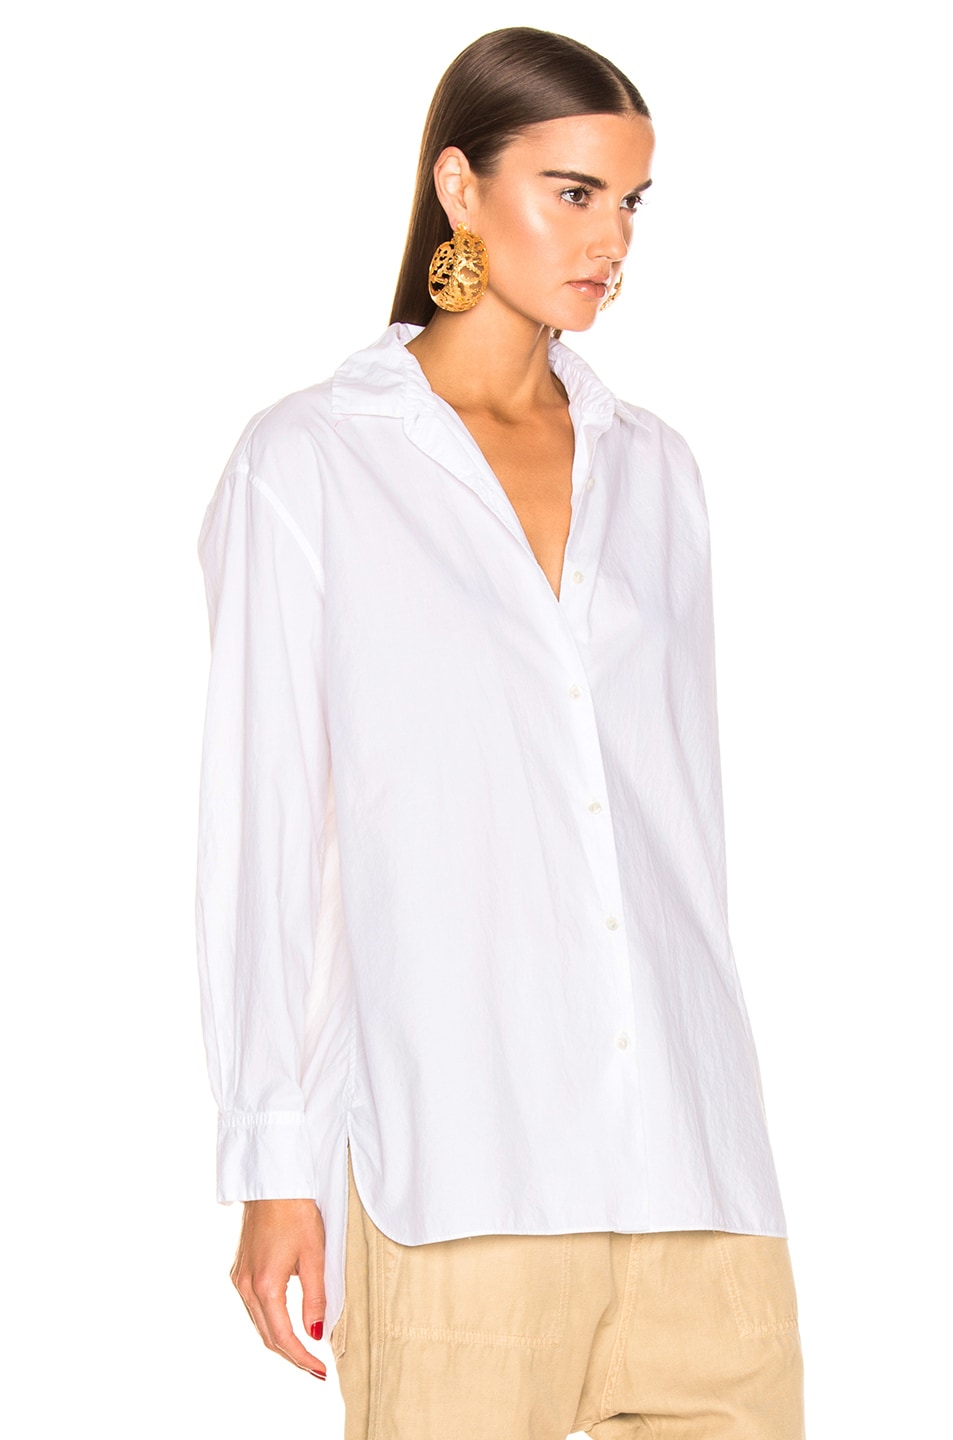 NILI LOTAN Yorke Shirt in White | FWRD